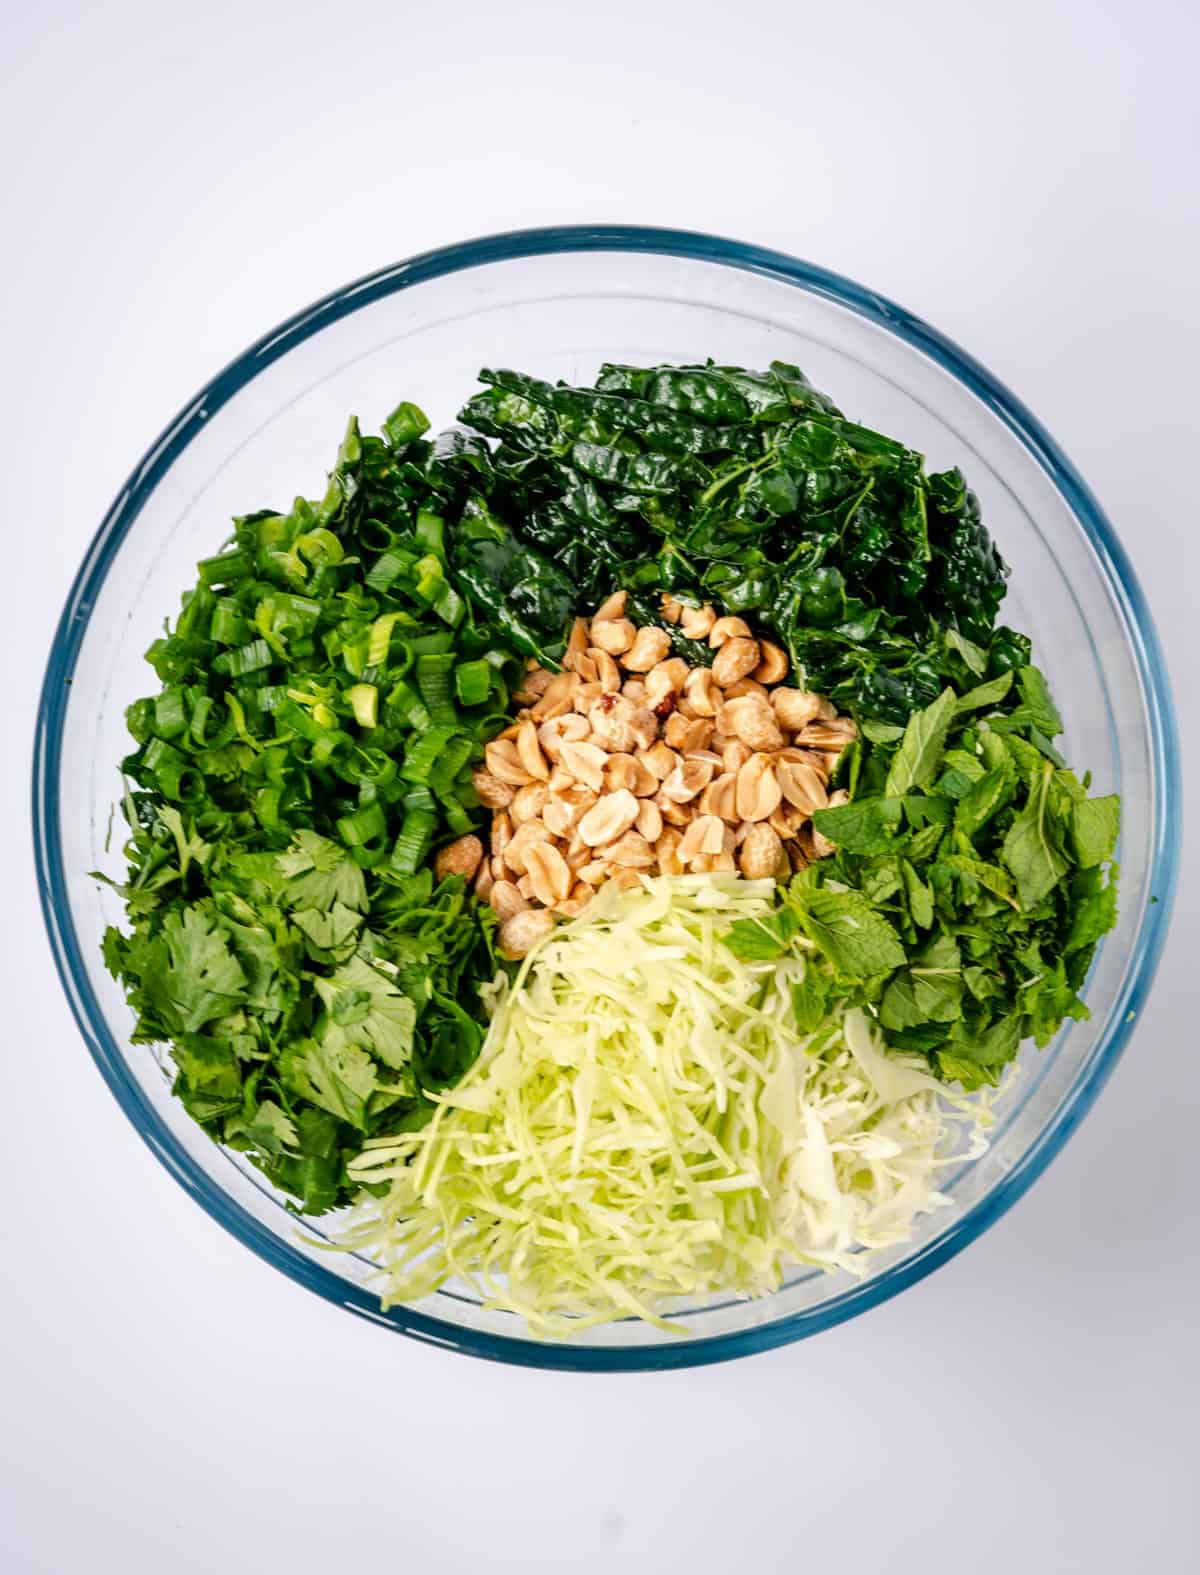 Kale salad ingredients in bowl on top of massaged kale